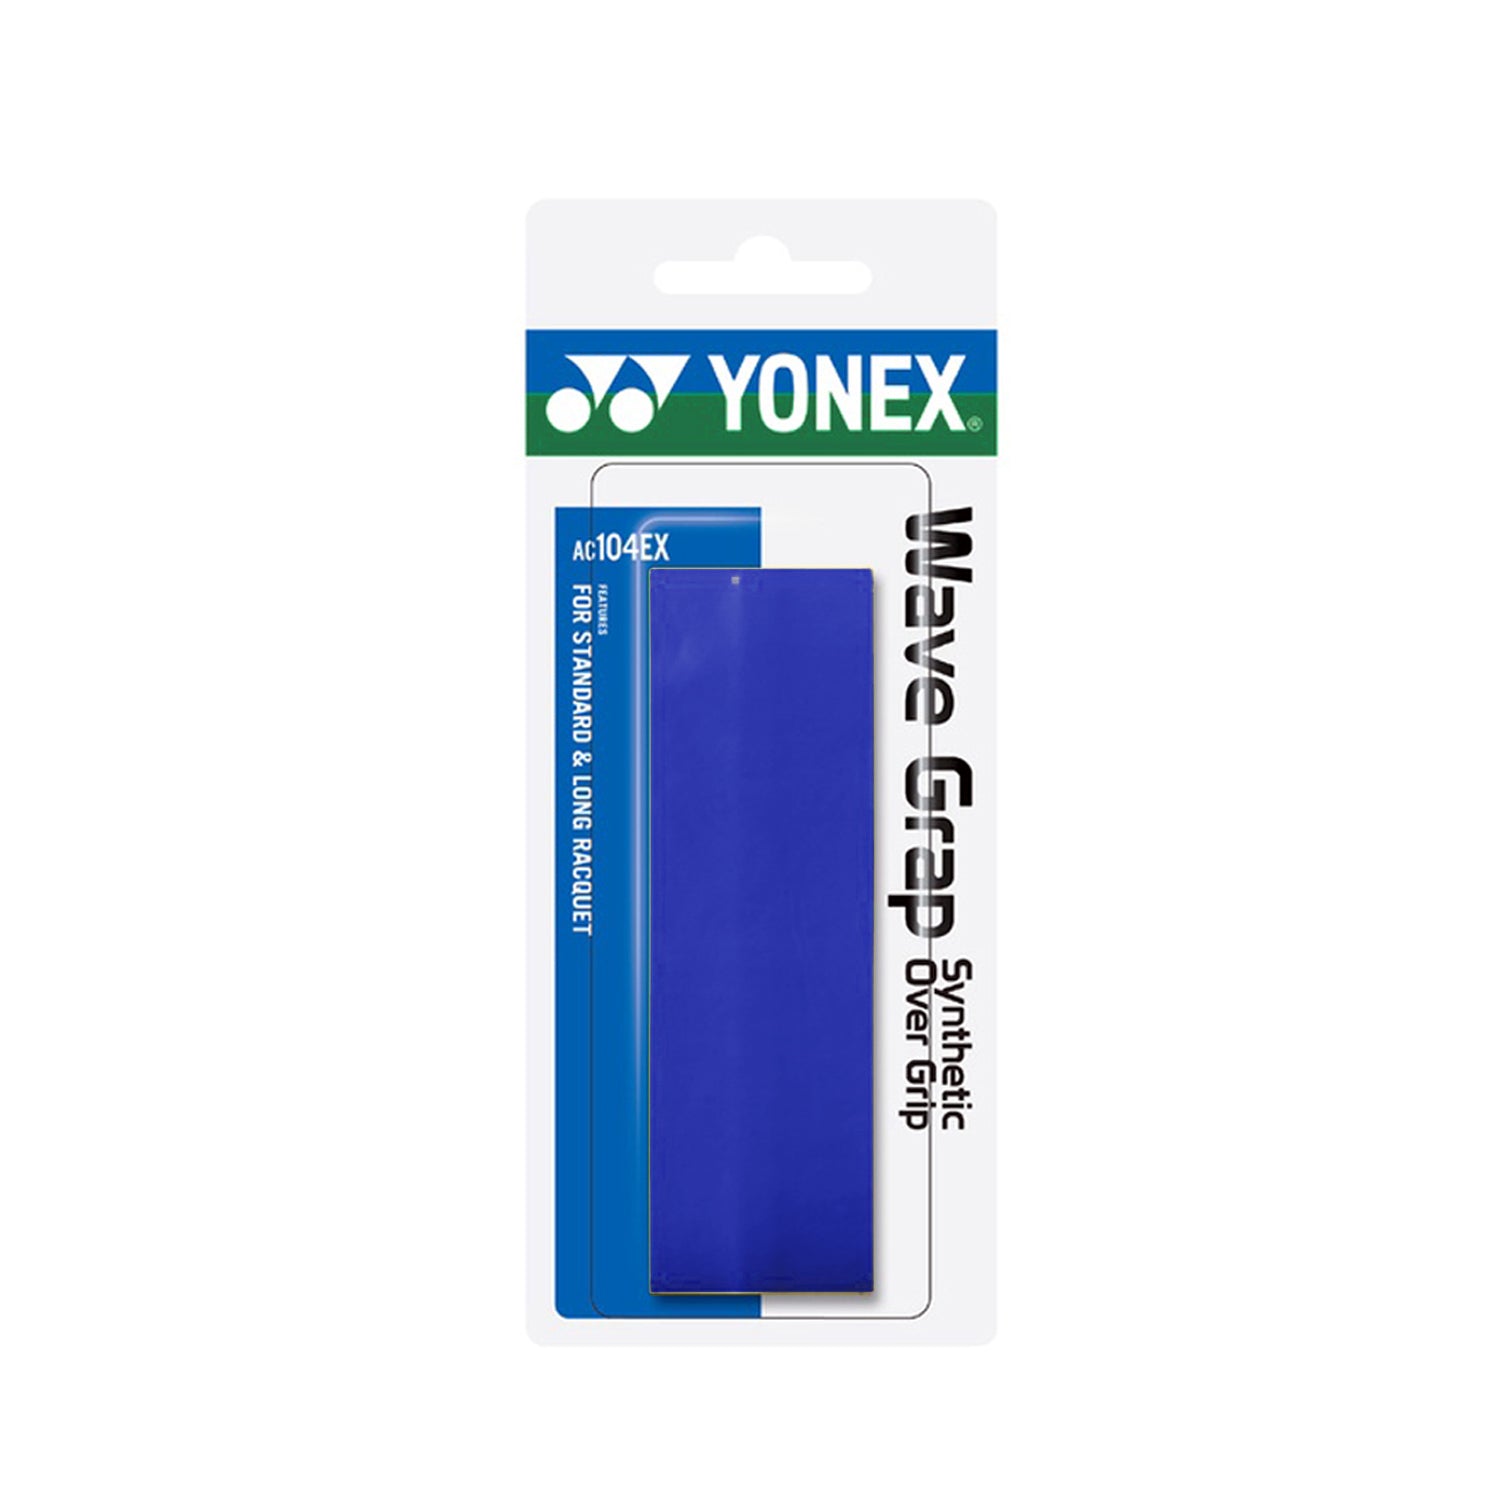 Yonex AC 104 EX Wave Grap Badminton Grip Tape - Deep Blue (1 Pc) - Best Price online Prokicksports.com